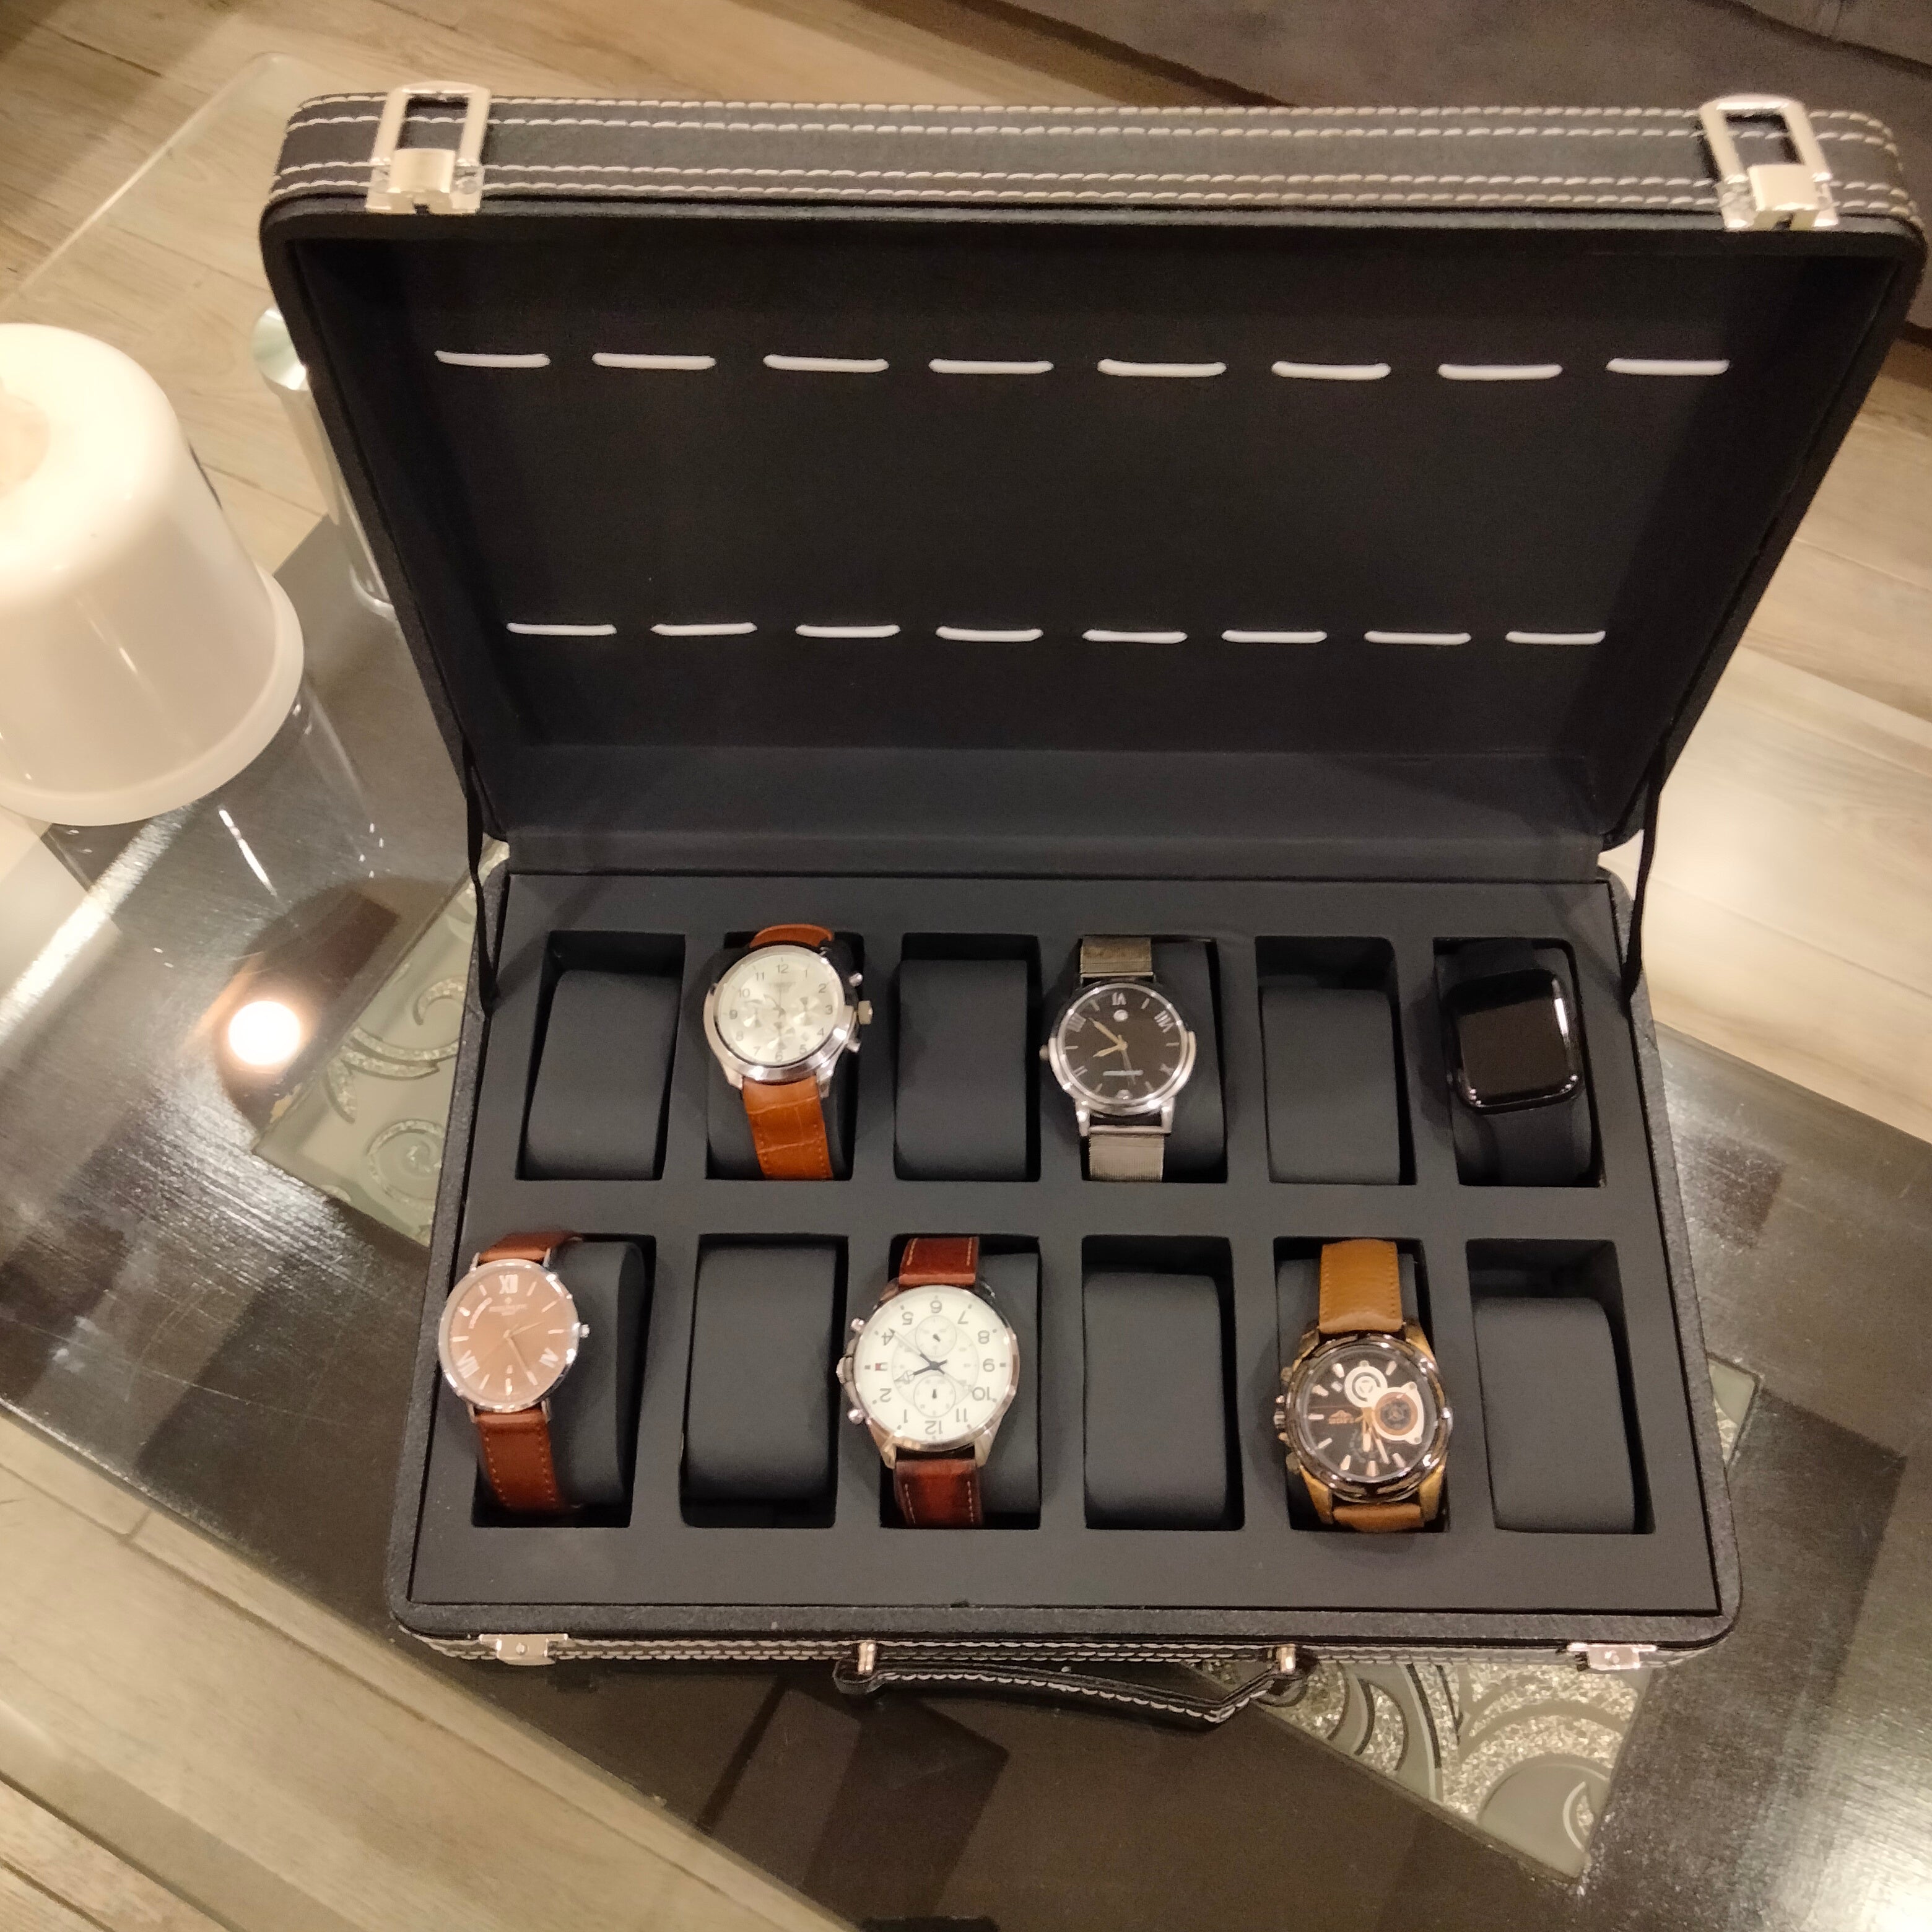 Premium Quality 12 grid PU leather watch display box or watch organizer